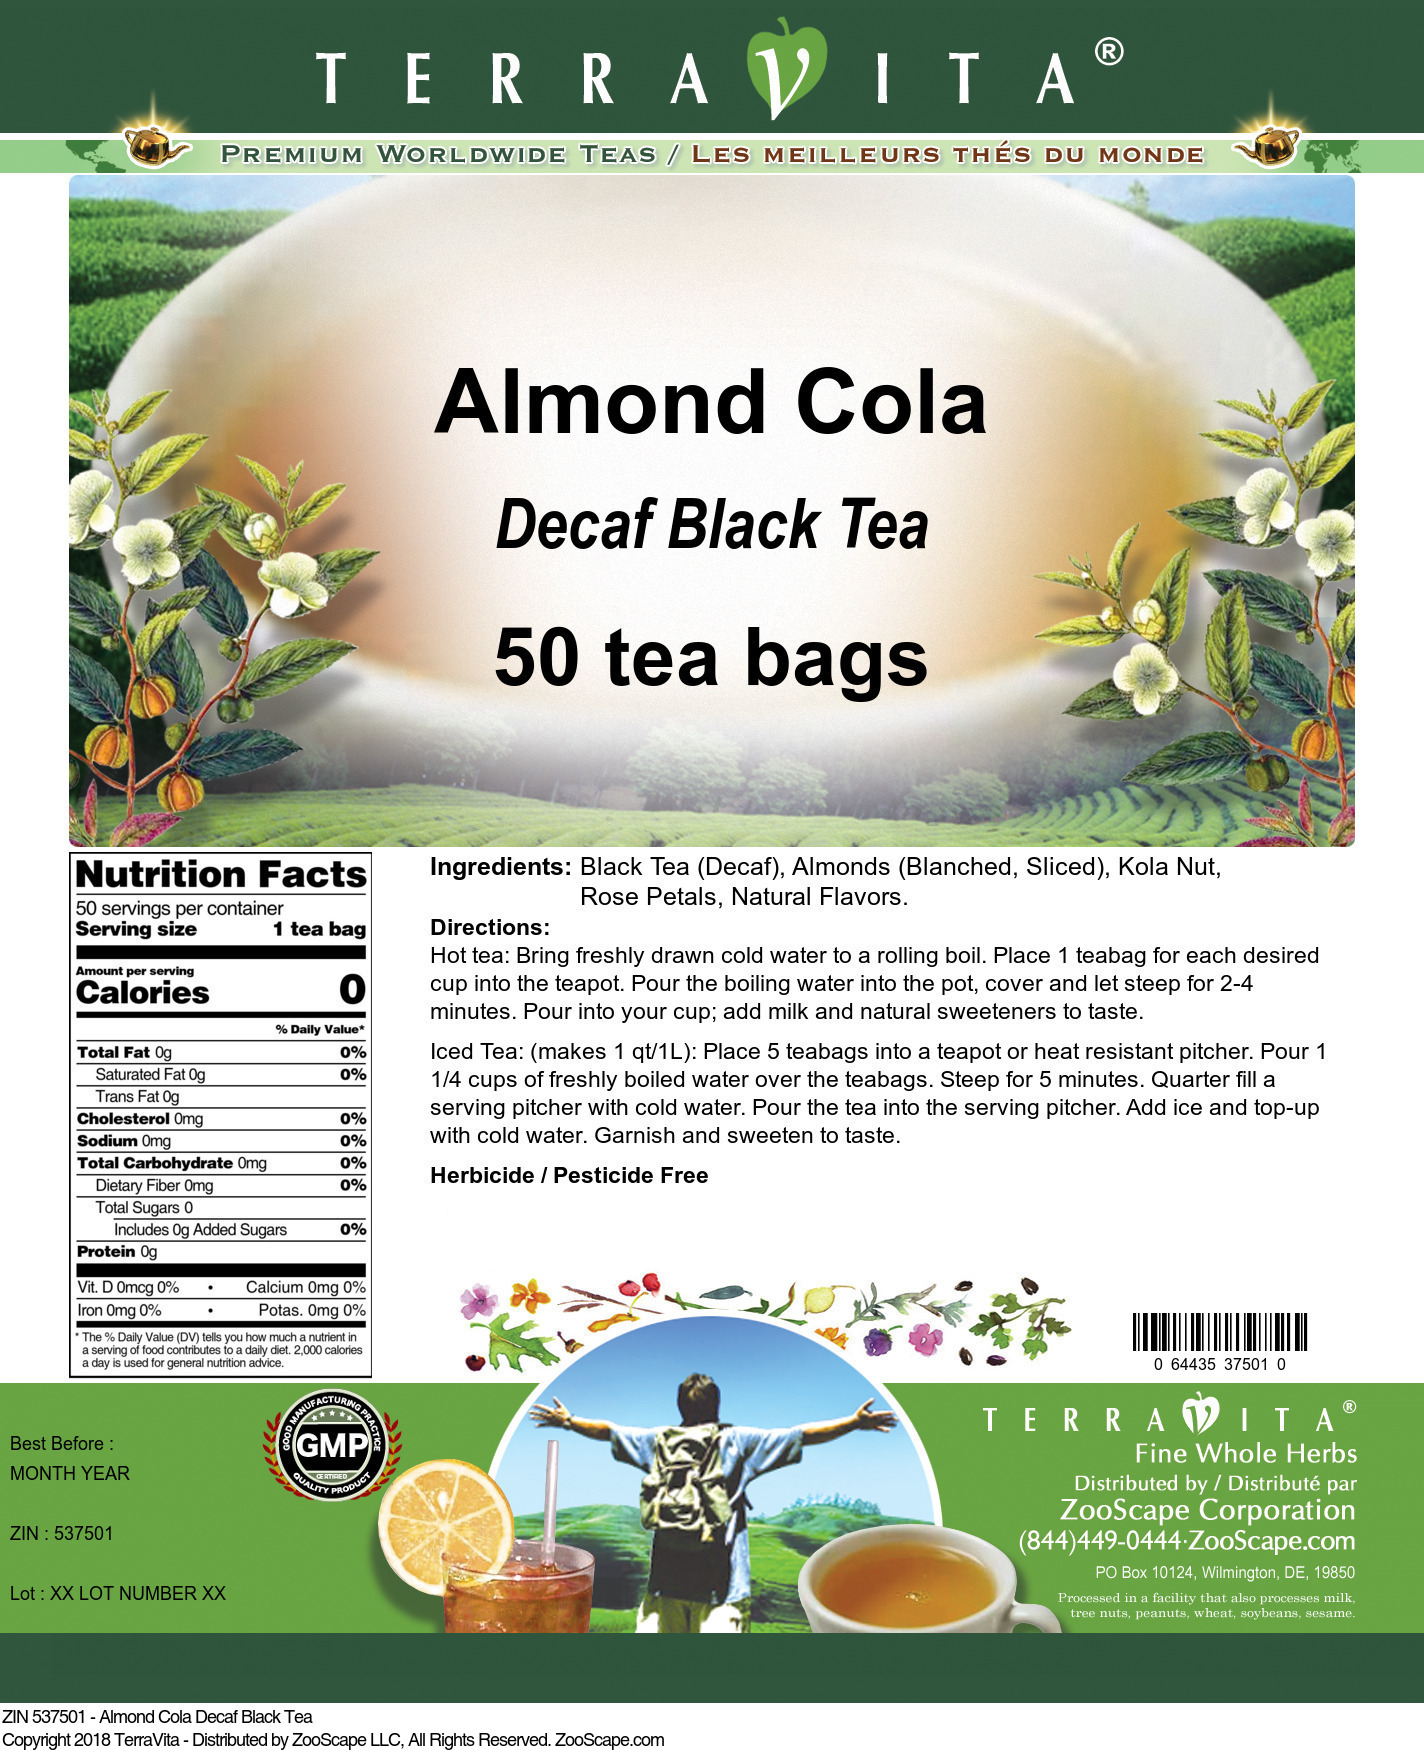 Almond Cola Decaf Black Tea - Label